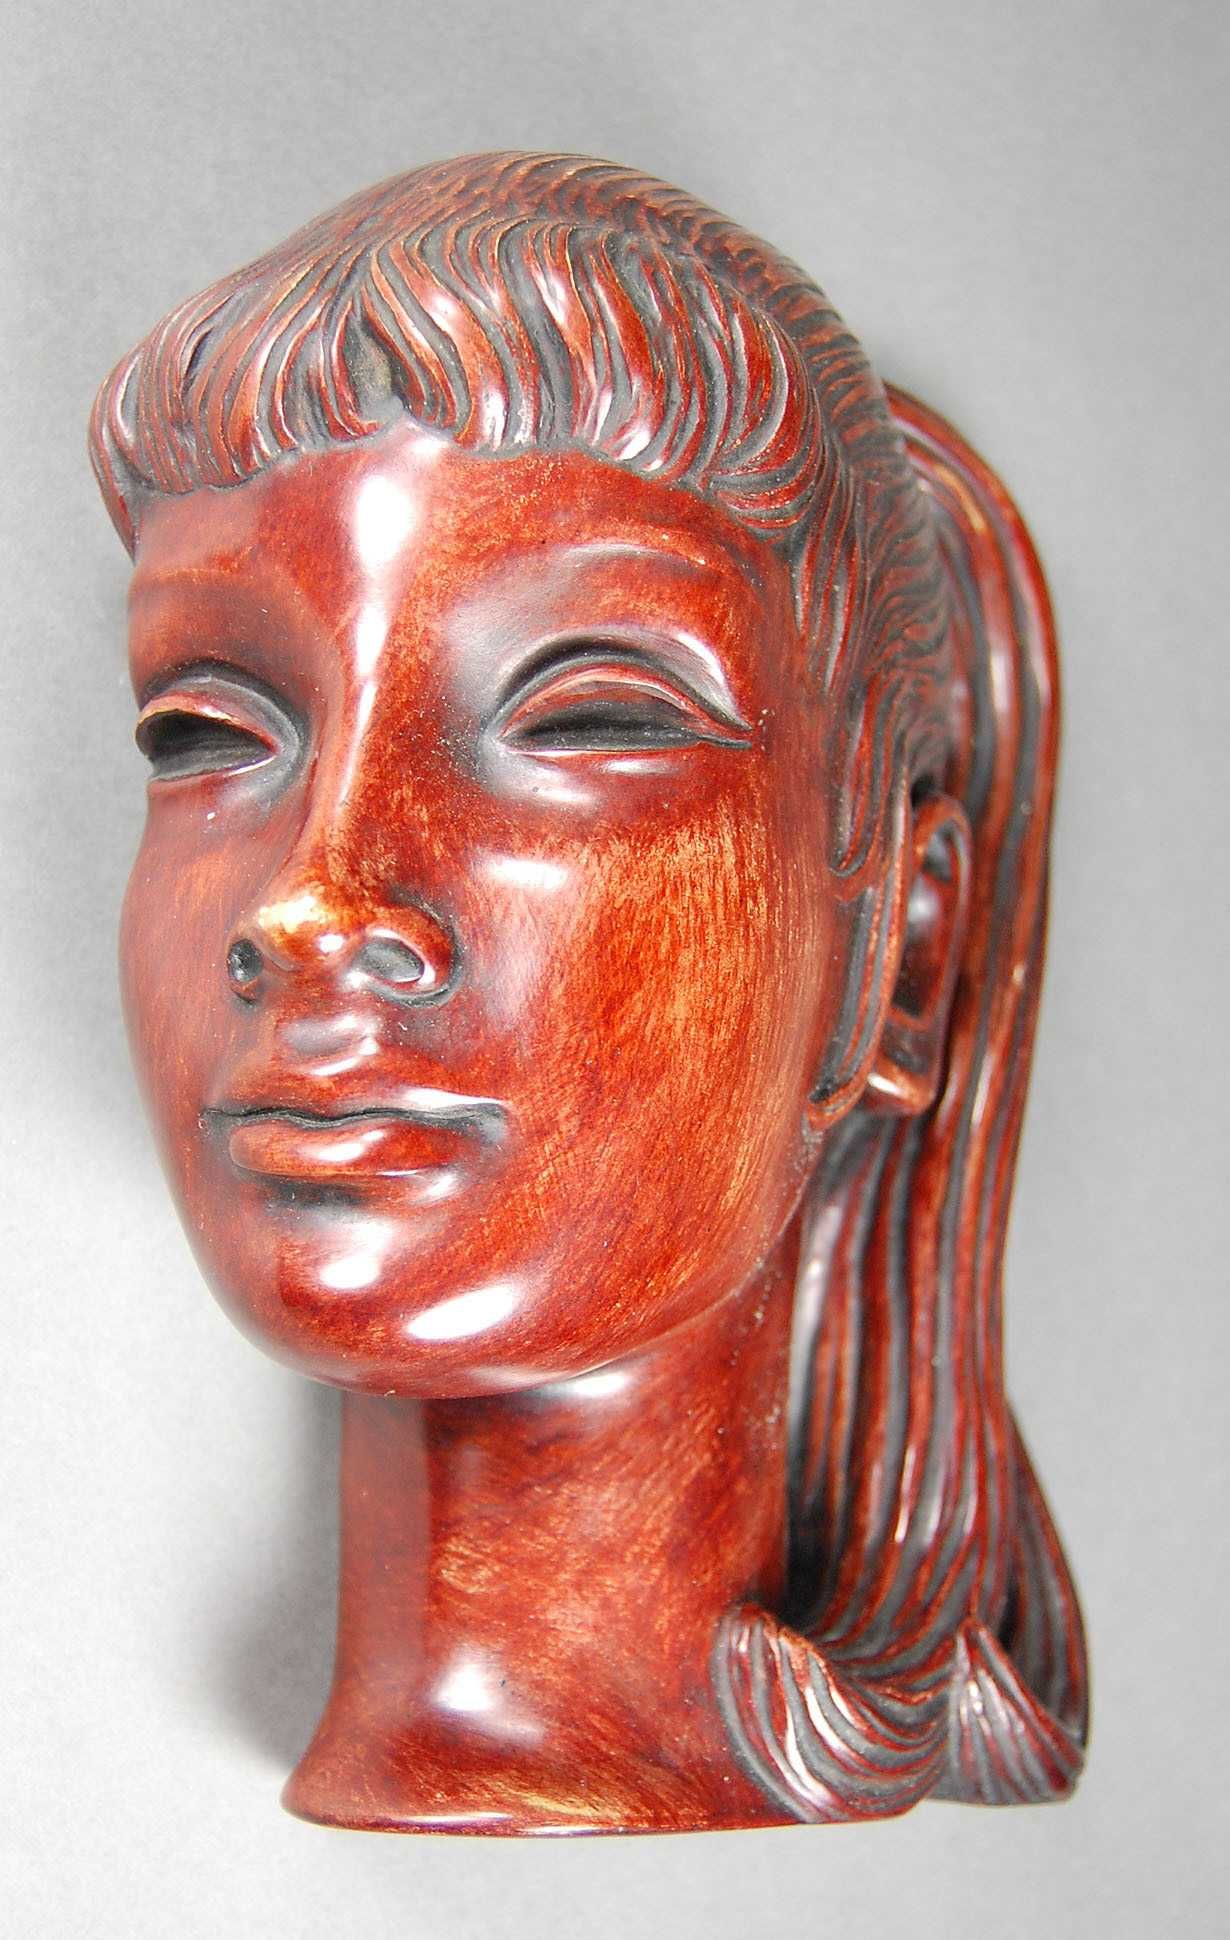 sculptura handmade, chip fetita Achatit Germania, anii 1950, colectie